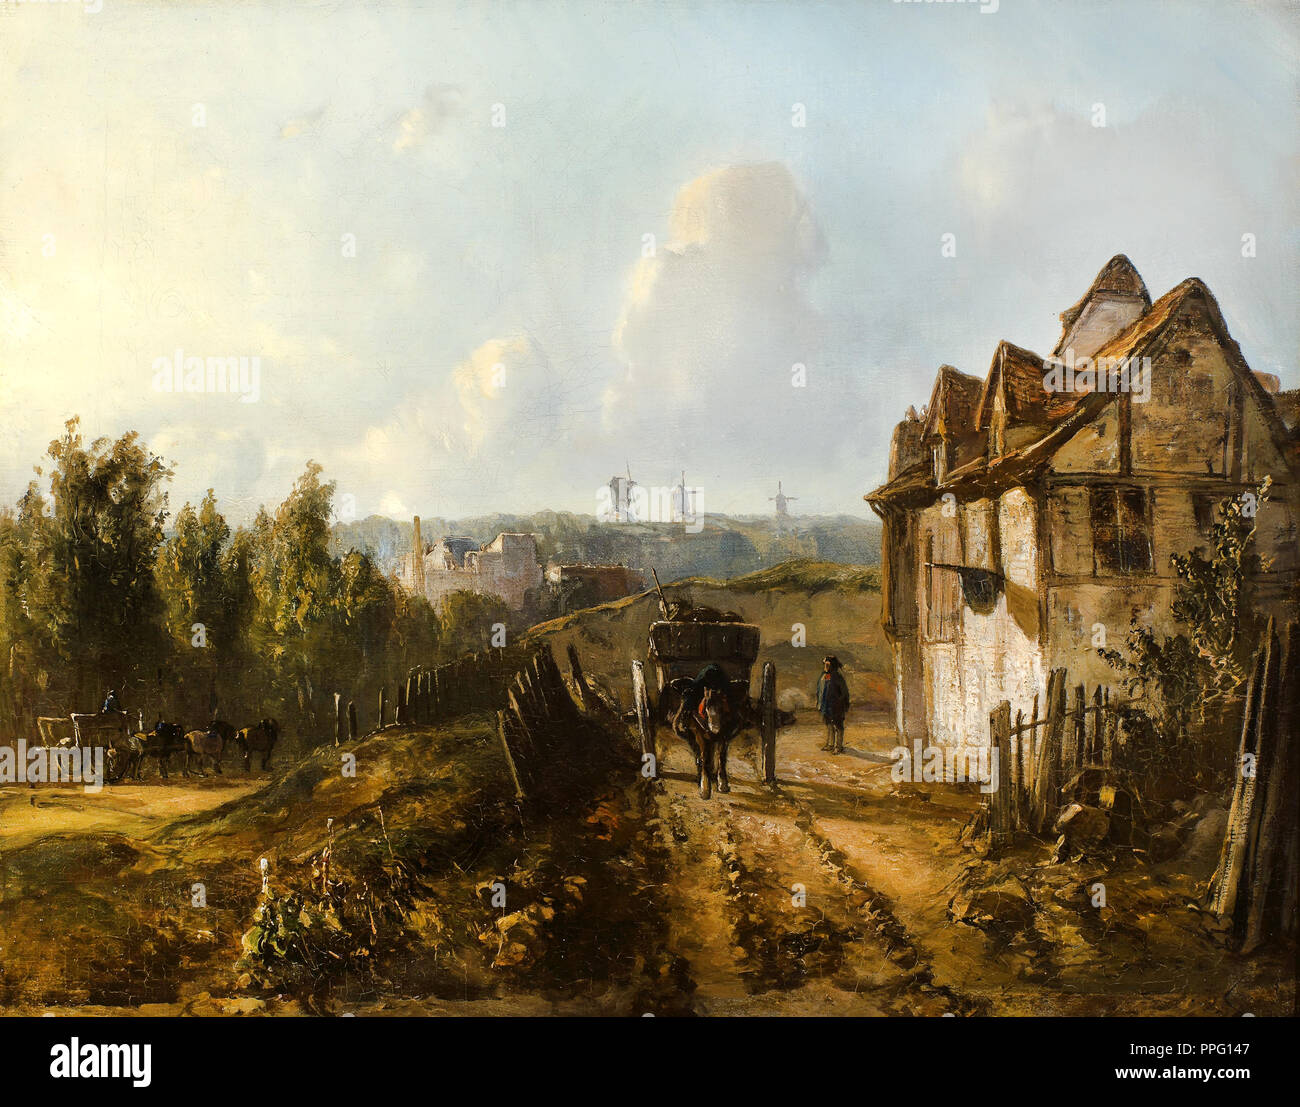 Johan Jongkind - Blick auf Montmartre. Circa 1850. Öl auf Leinwand. Das Museum Boijmans Van Beuningen, Rotterdam, Niederlande. Stockfoto